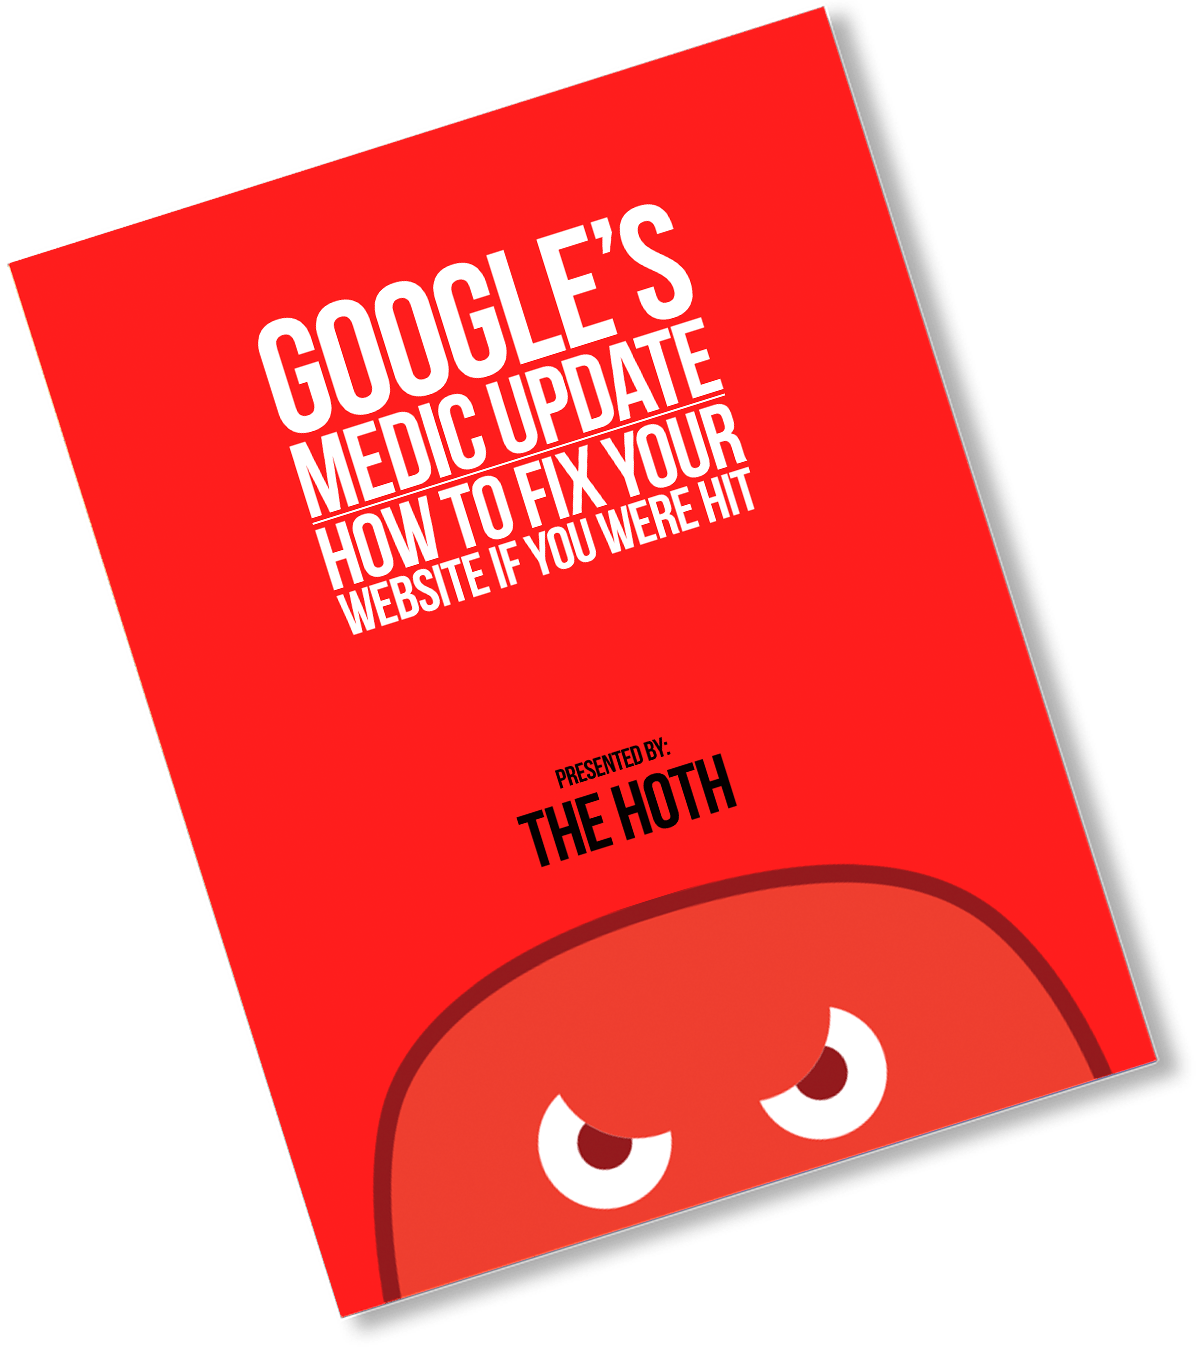 Google Medic Update Guide